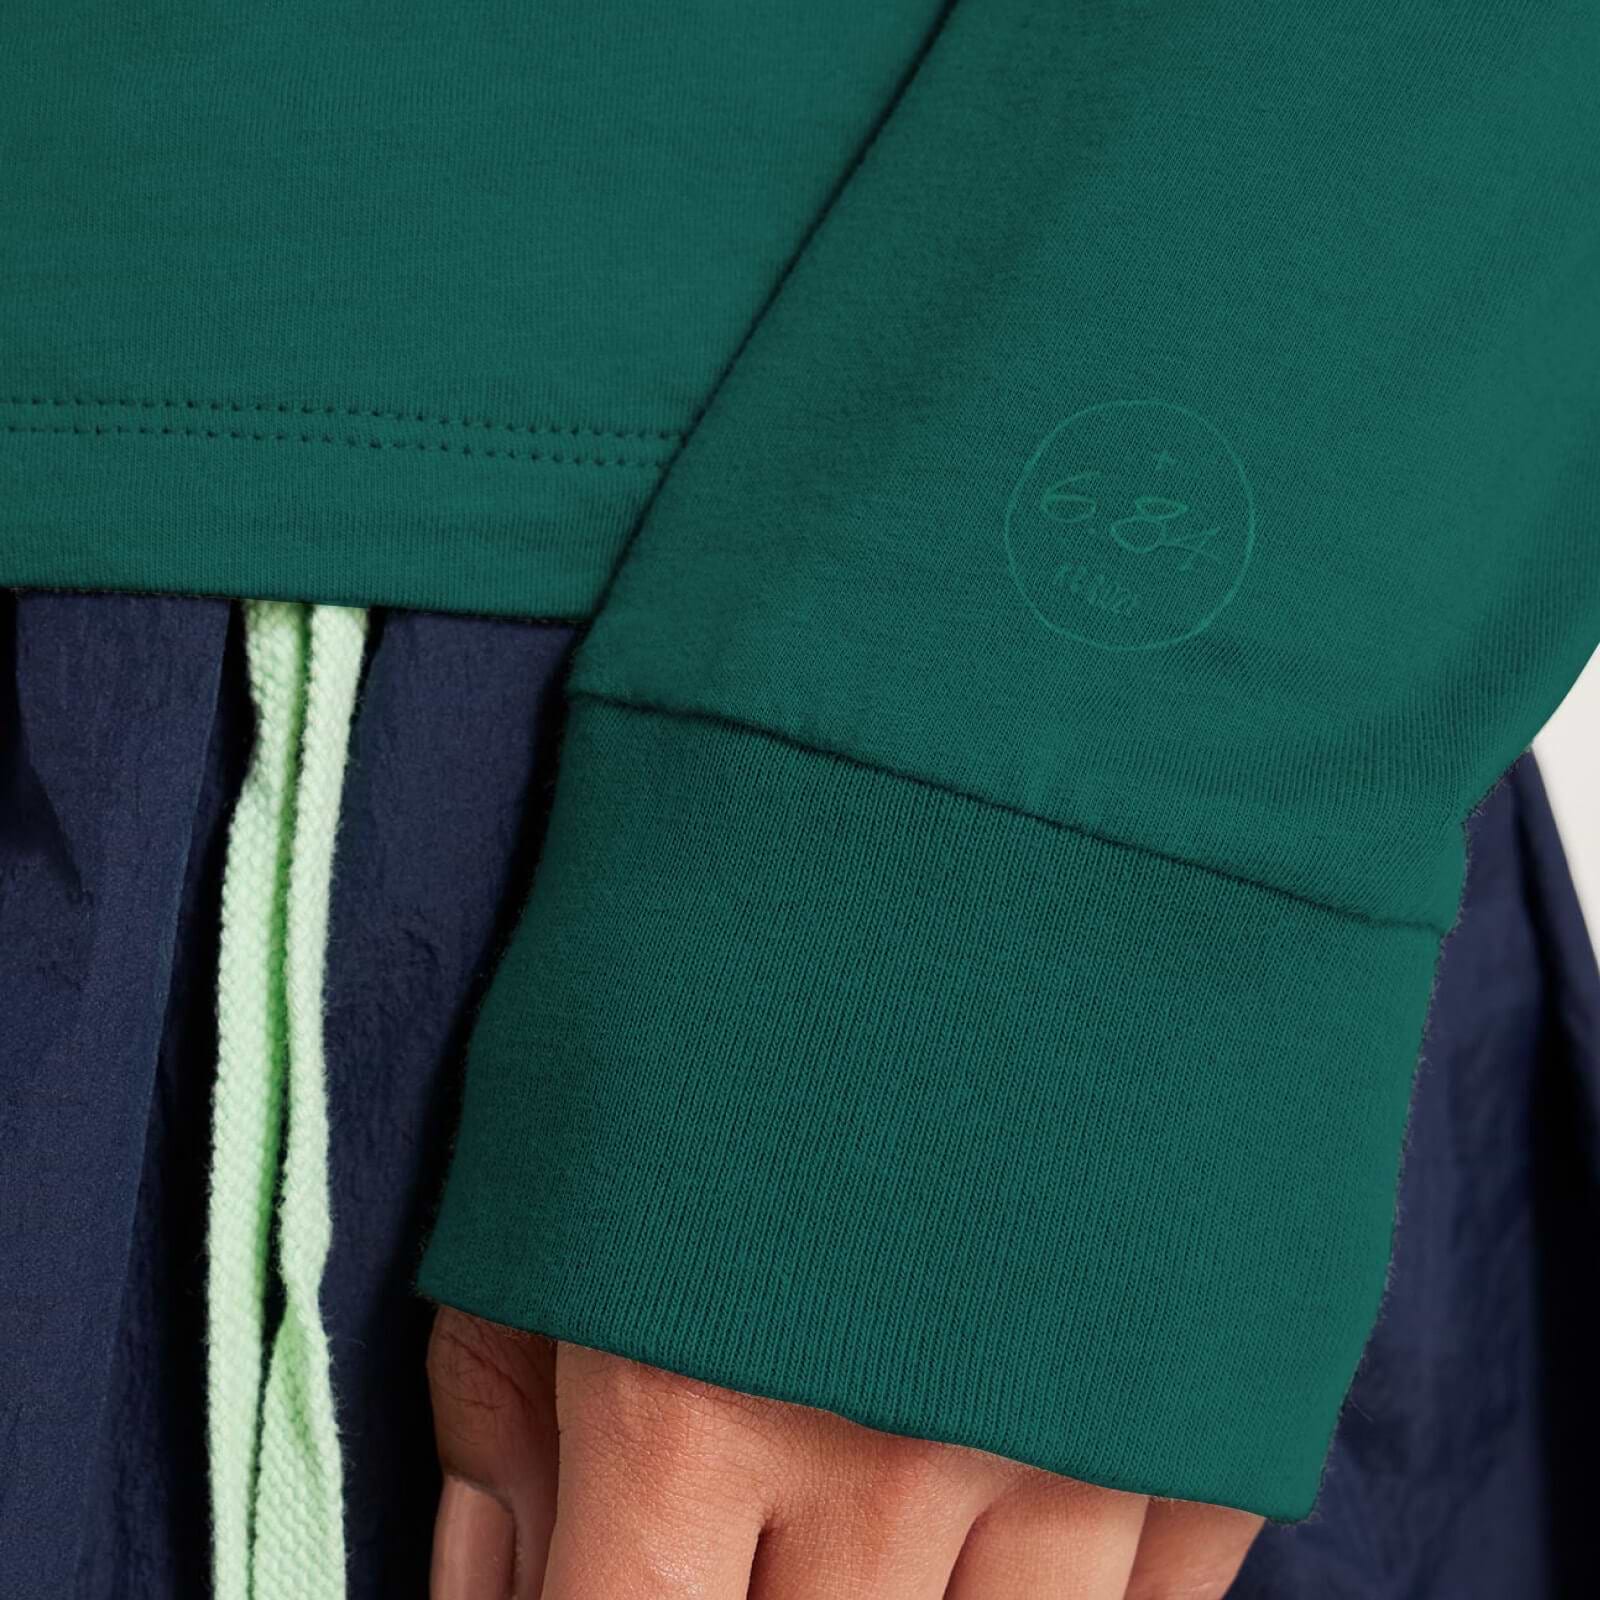 Women's Allgood Cotton Long Sleeve Tee - Deep Emerald